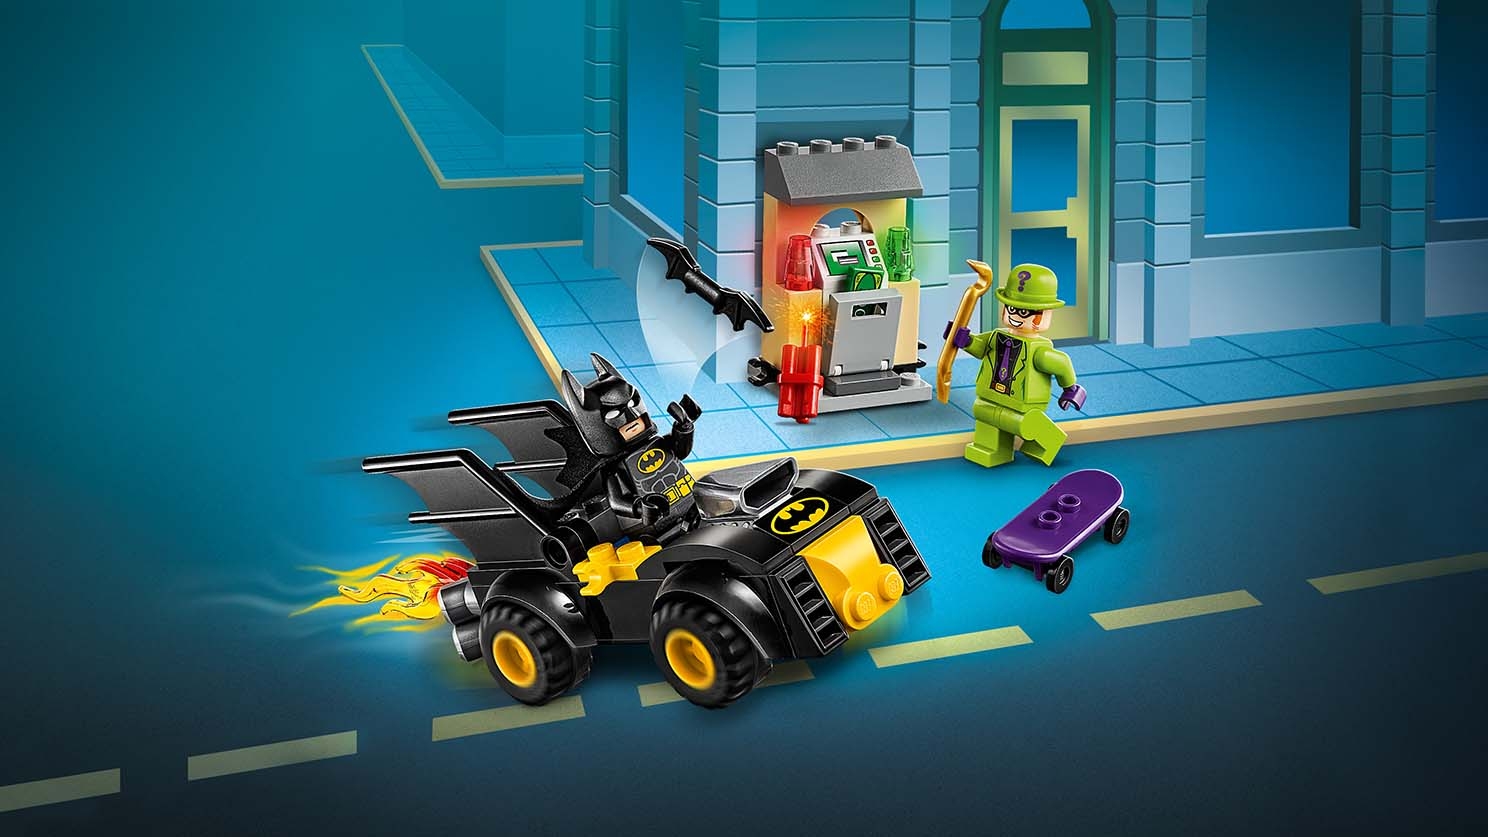 Lego Batman 3: Beyond Gotham - Walkthrough Part 7 - Firefly & Cheetah 